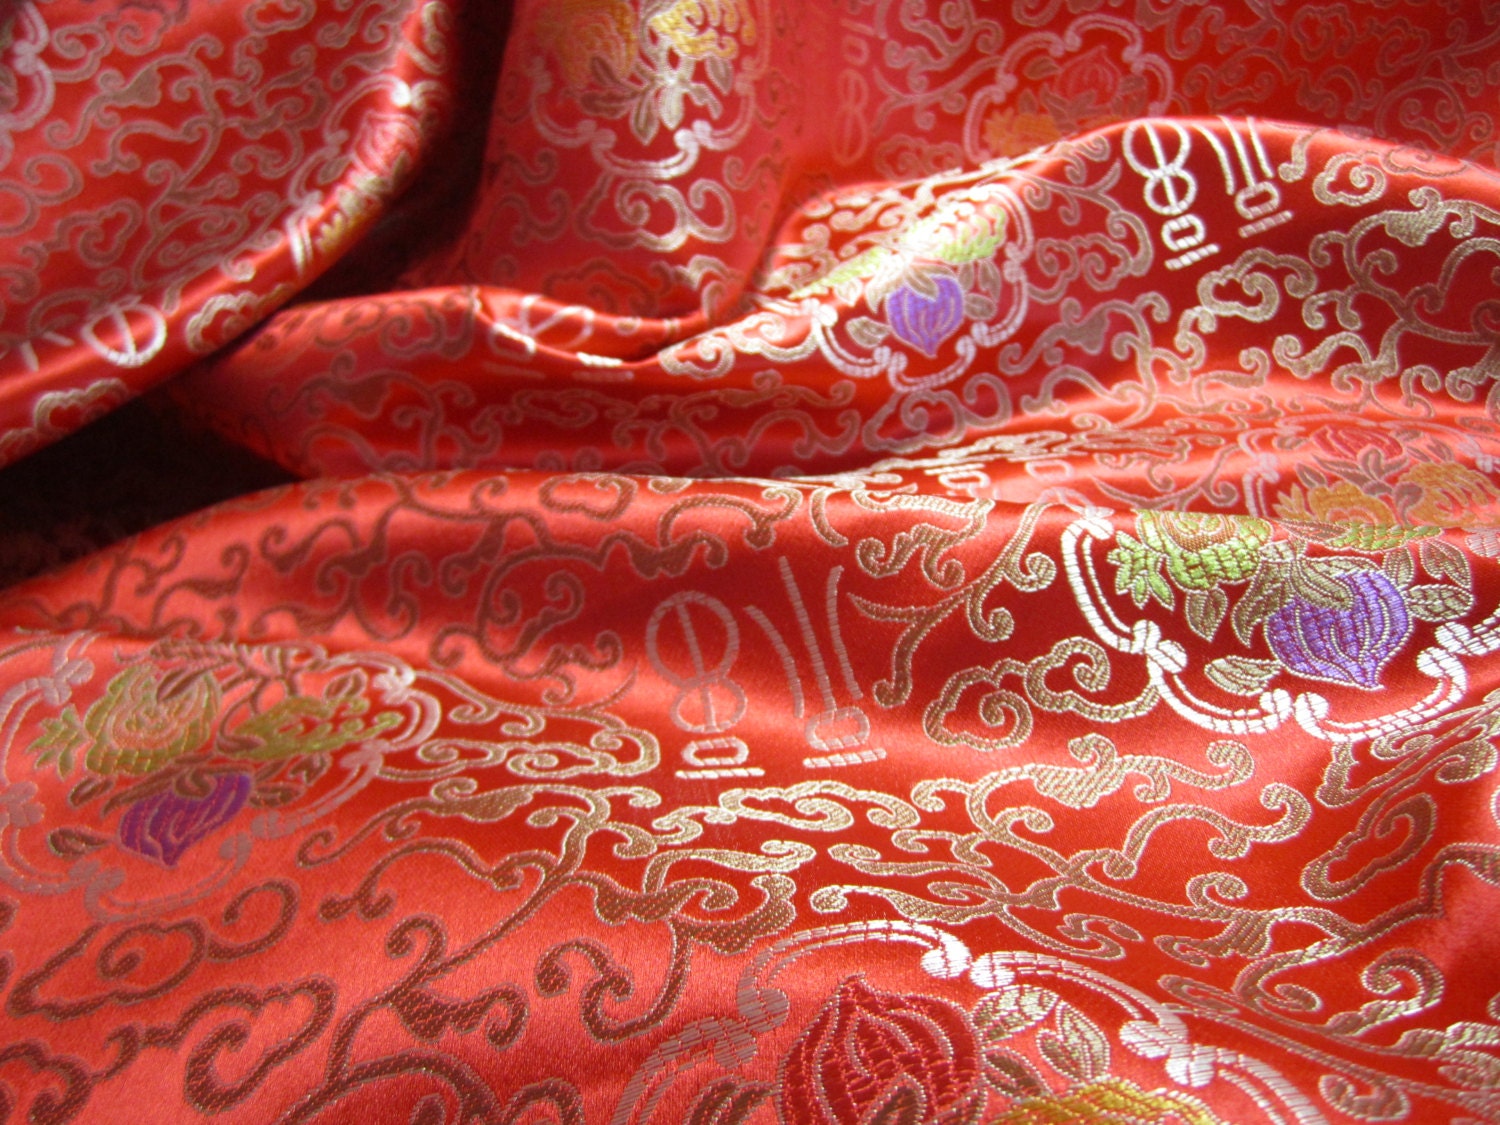 Chinese brocade 1 yard of Chinese red satin brocade fabric